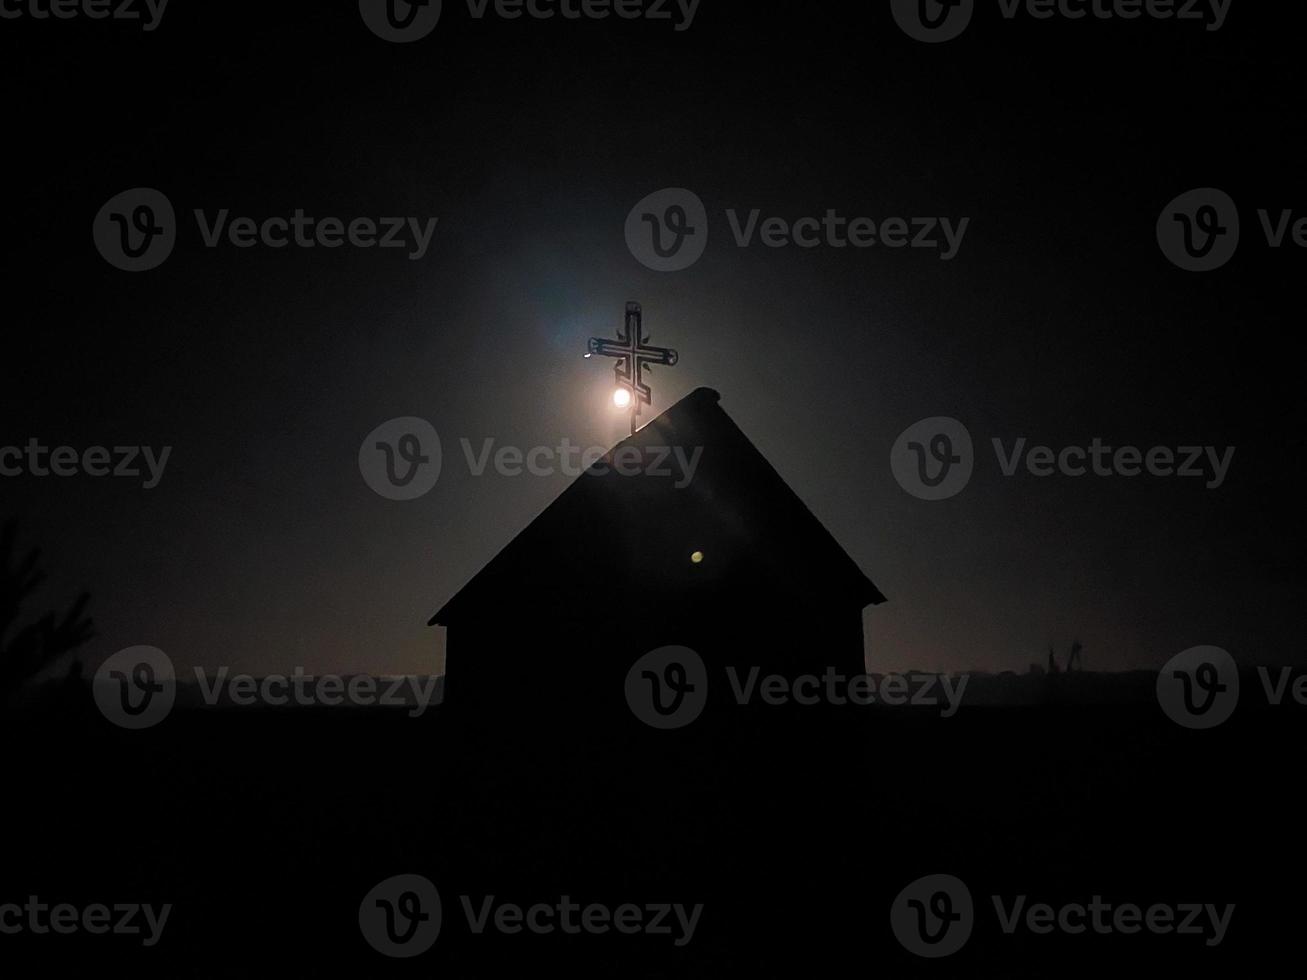 iglesia ortodoxa en la noche de luna llena foto